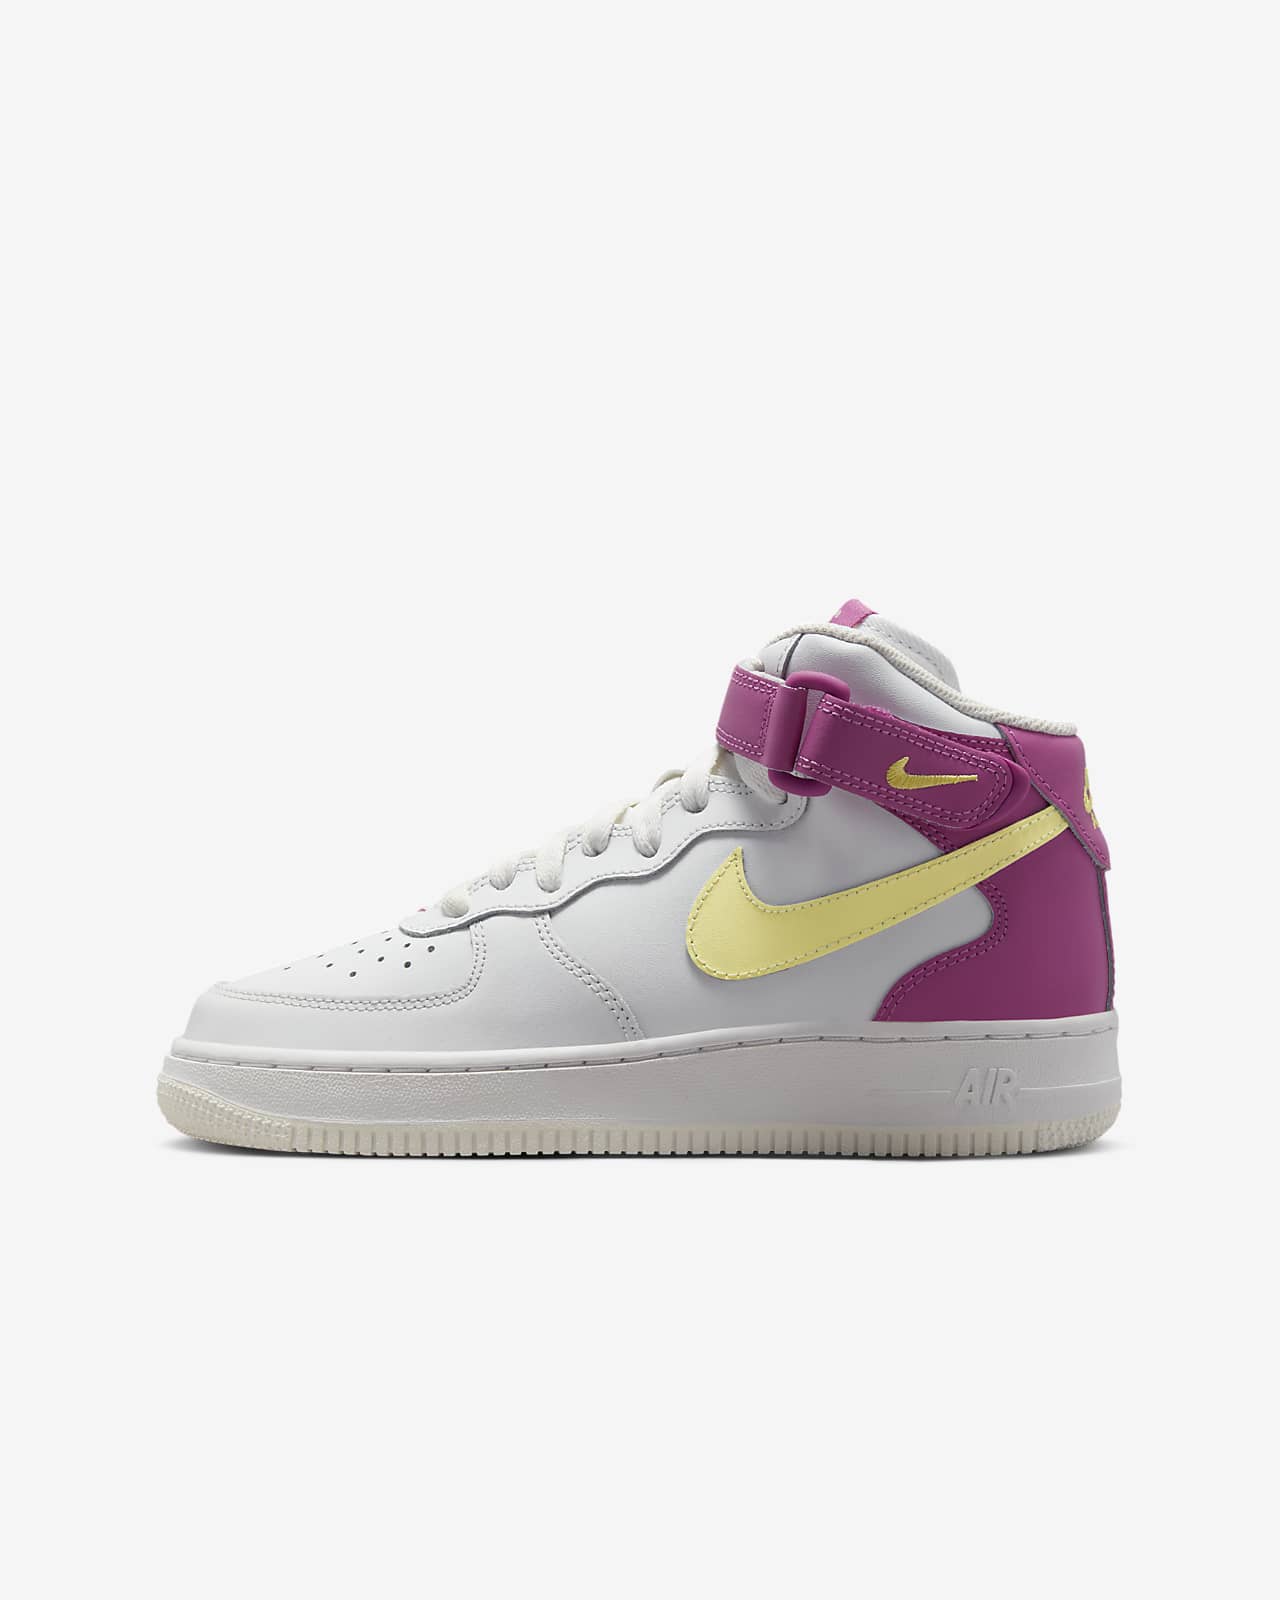 Nike Air Force 1 Mid LE Schuh für ältere Kinder